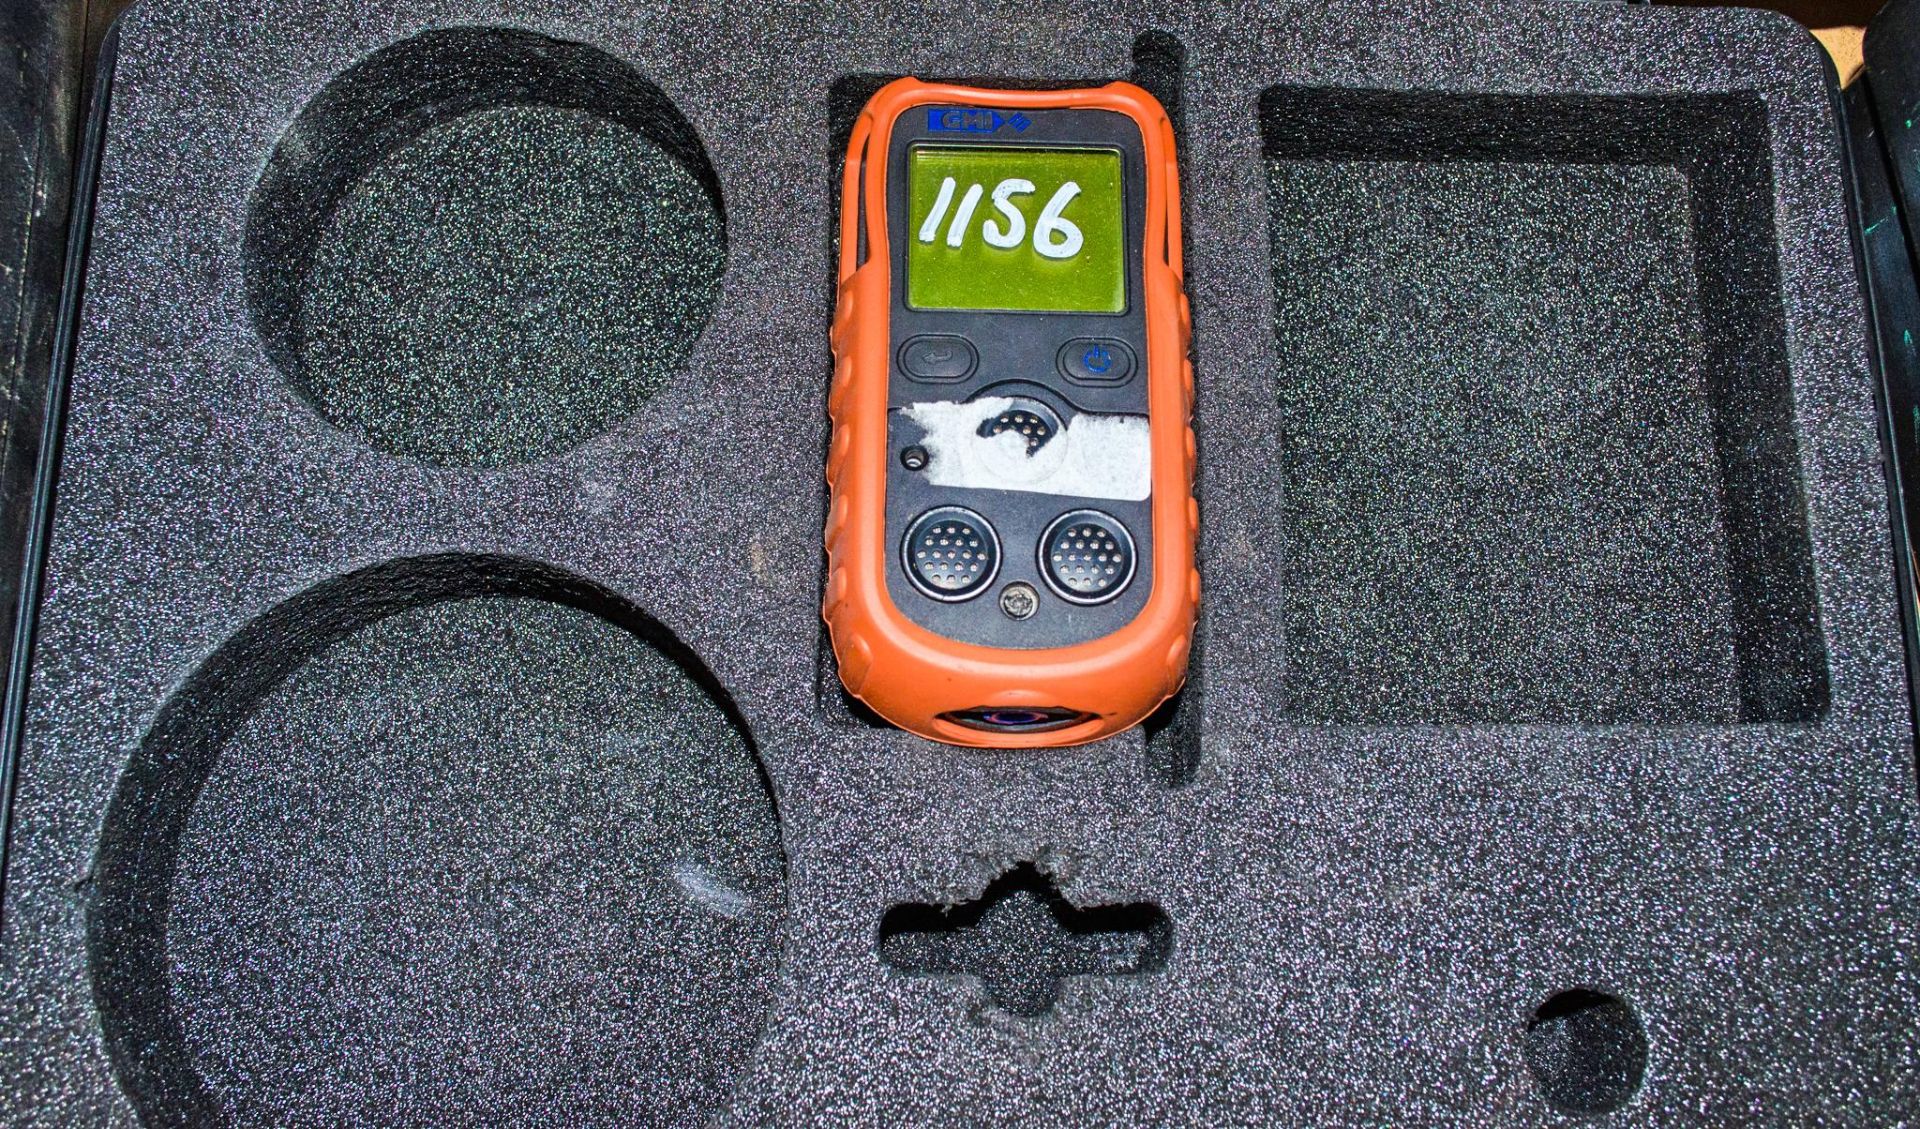 GMI PS200 gas detector c/w carry case